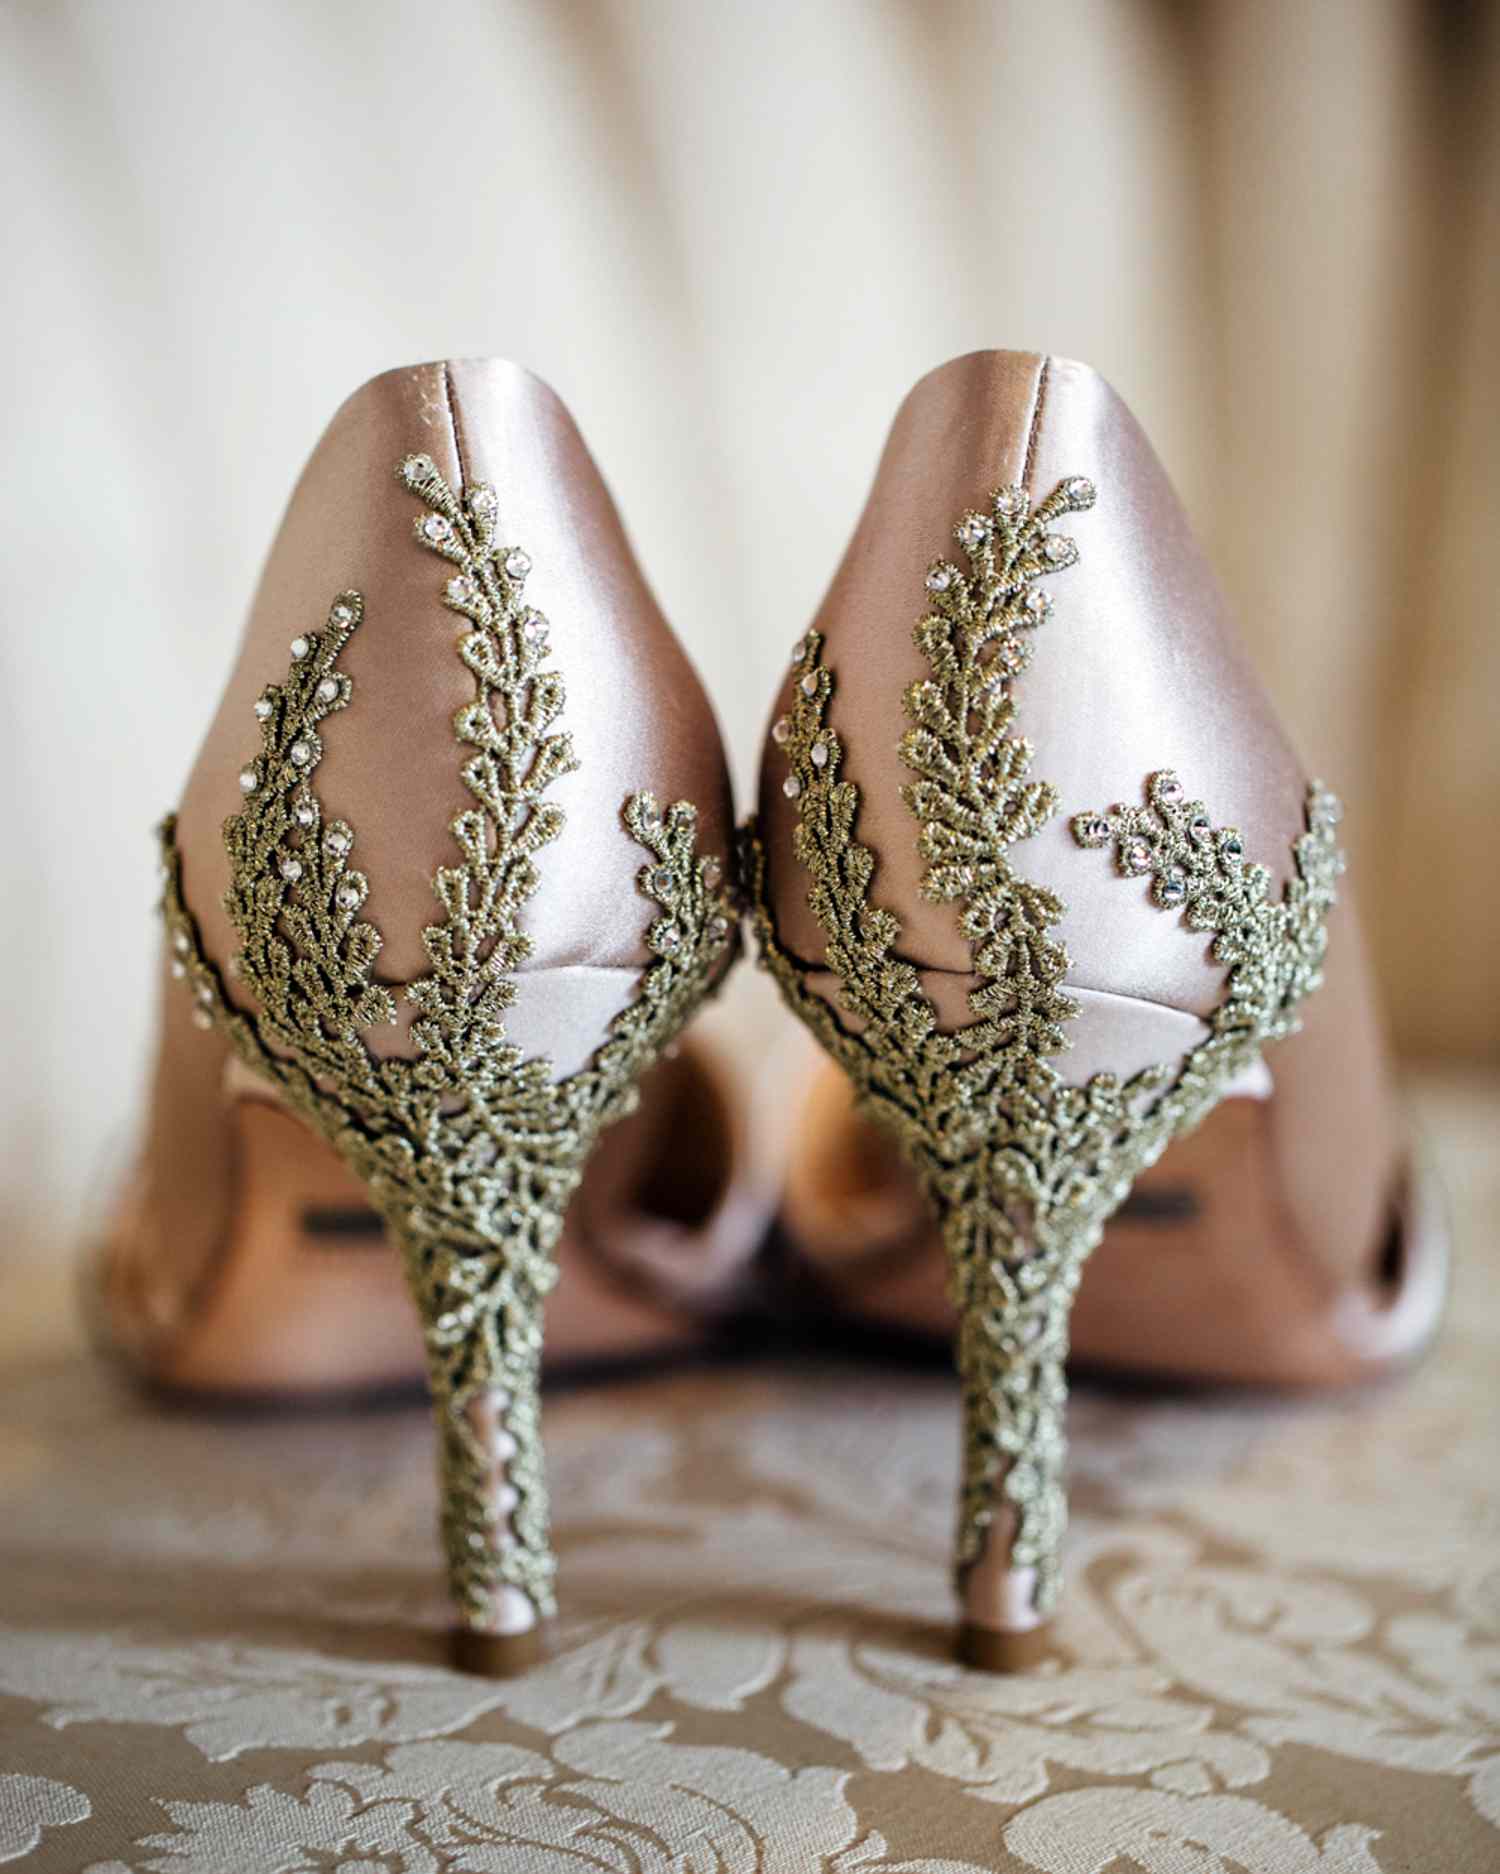 thea-rachit-wedding-shoes-0022-s112016-0715.jpg